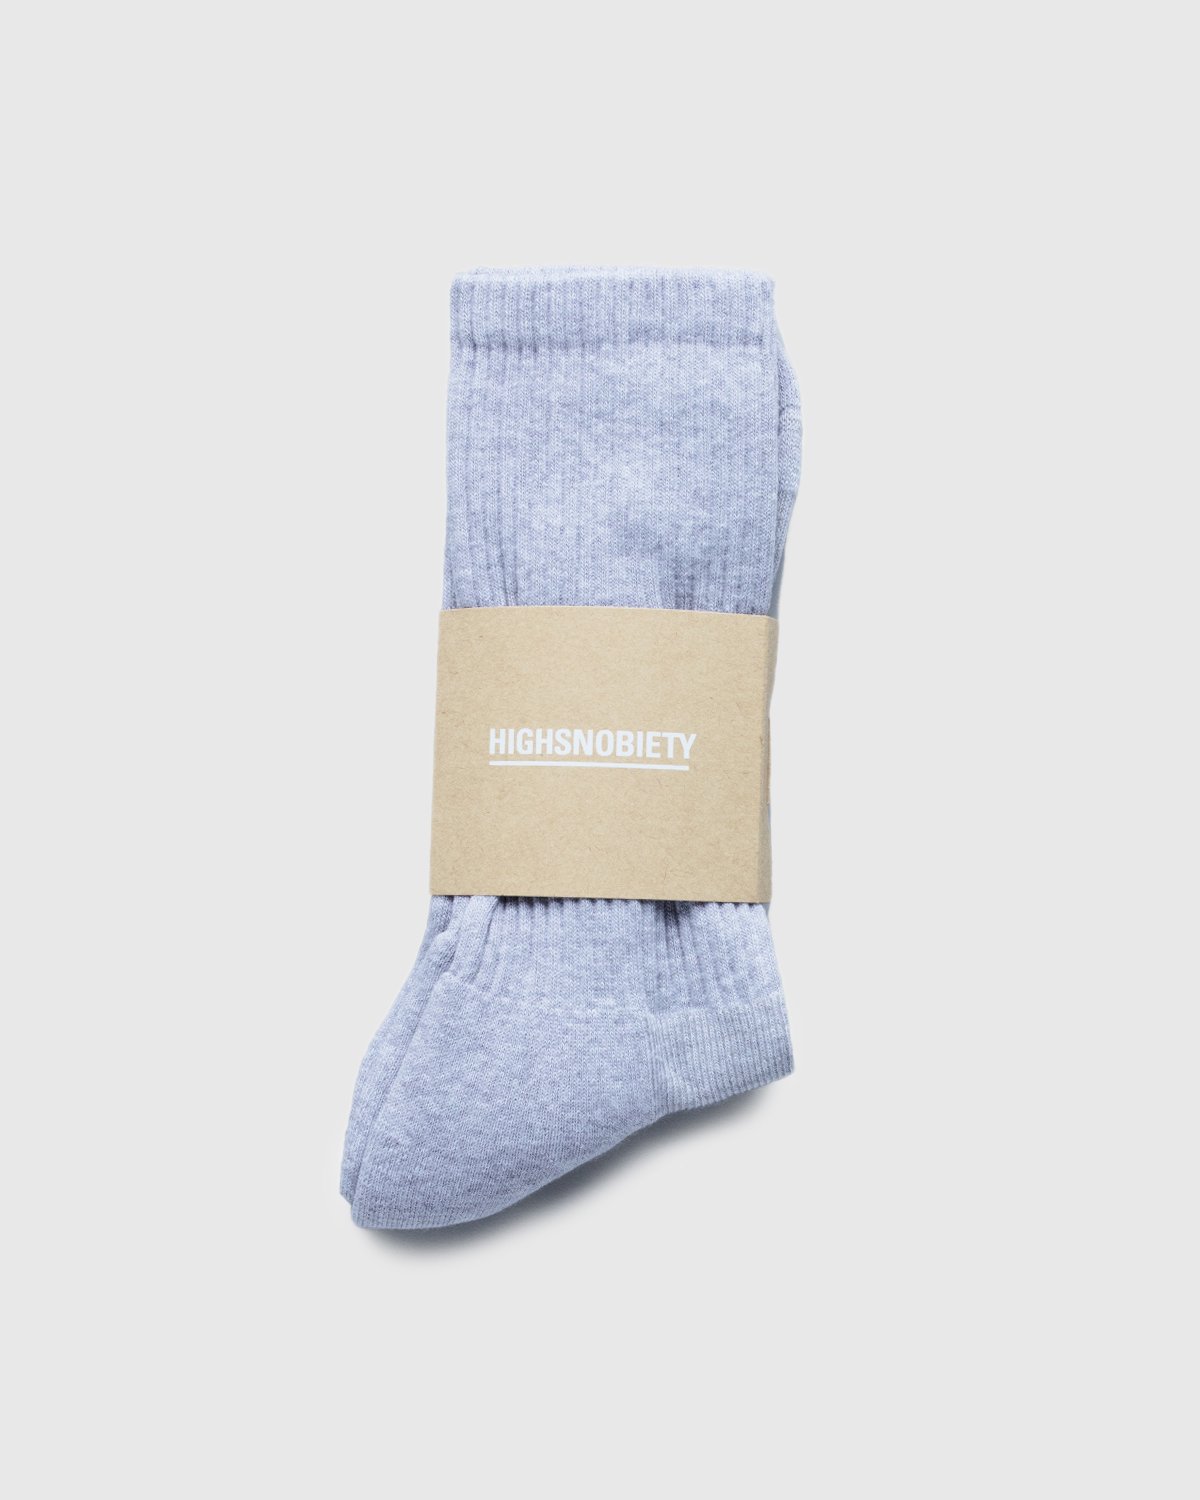 Highsnobiety - Socks Grey - Accessories - Grey - Image 2